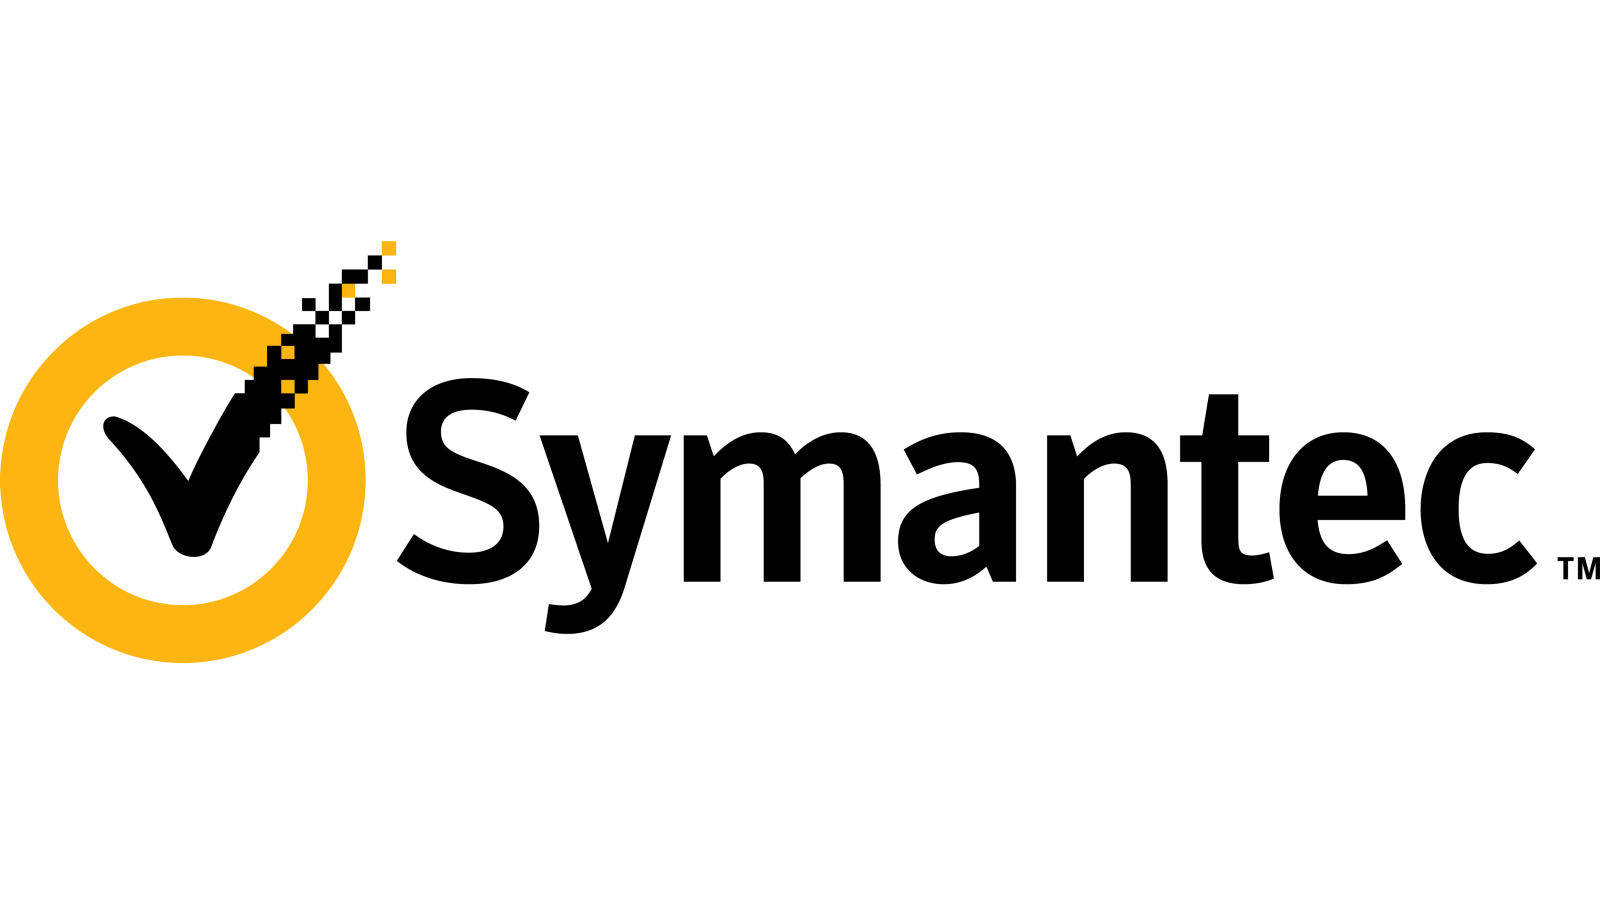 Symantec Logo - Did the Symantec Logo Cost 1.28 Billion?